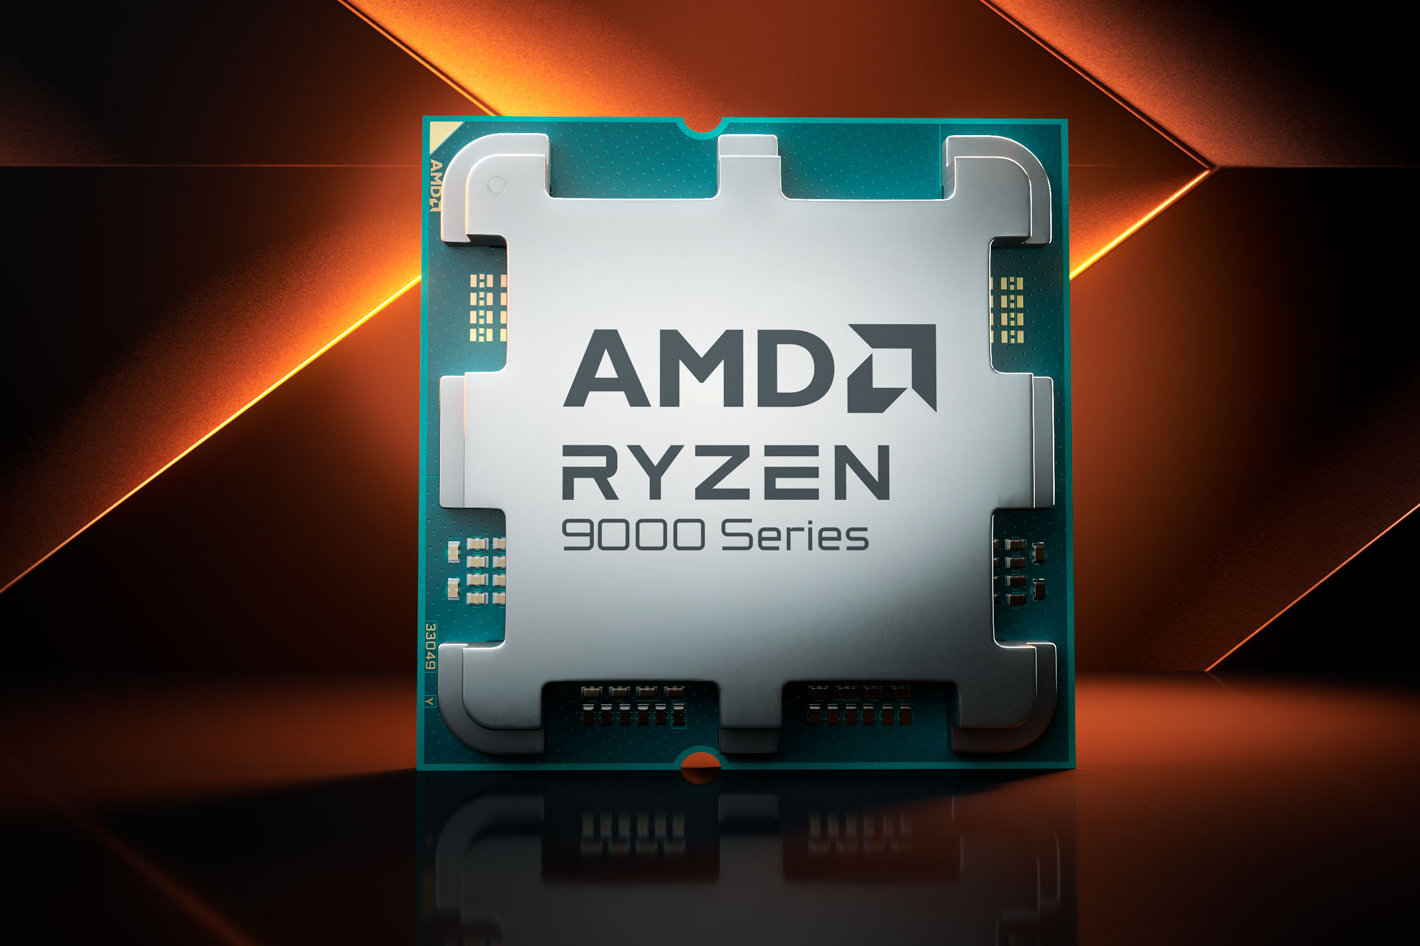 AMD Ryzen 9 9950X: the fastest consumer desktop performance in the world